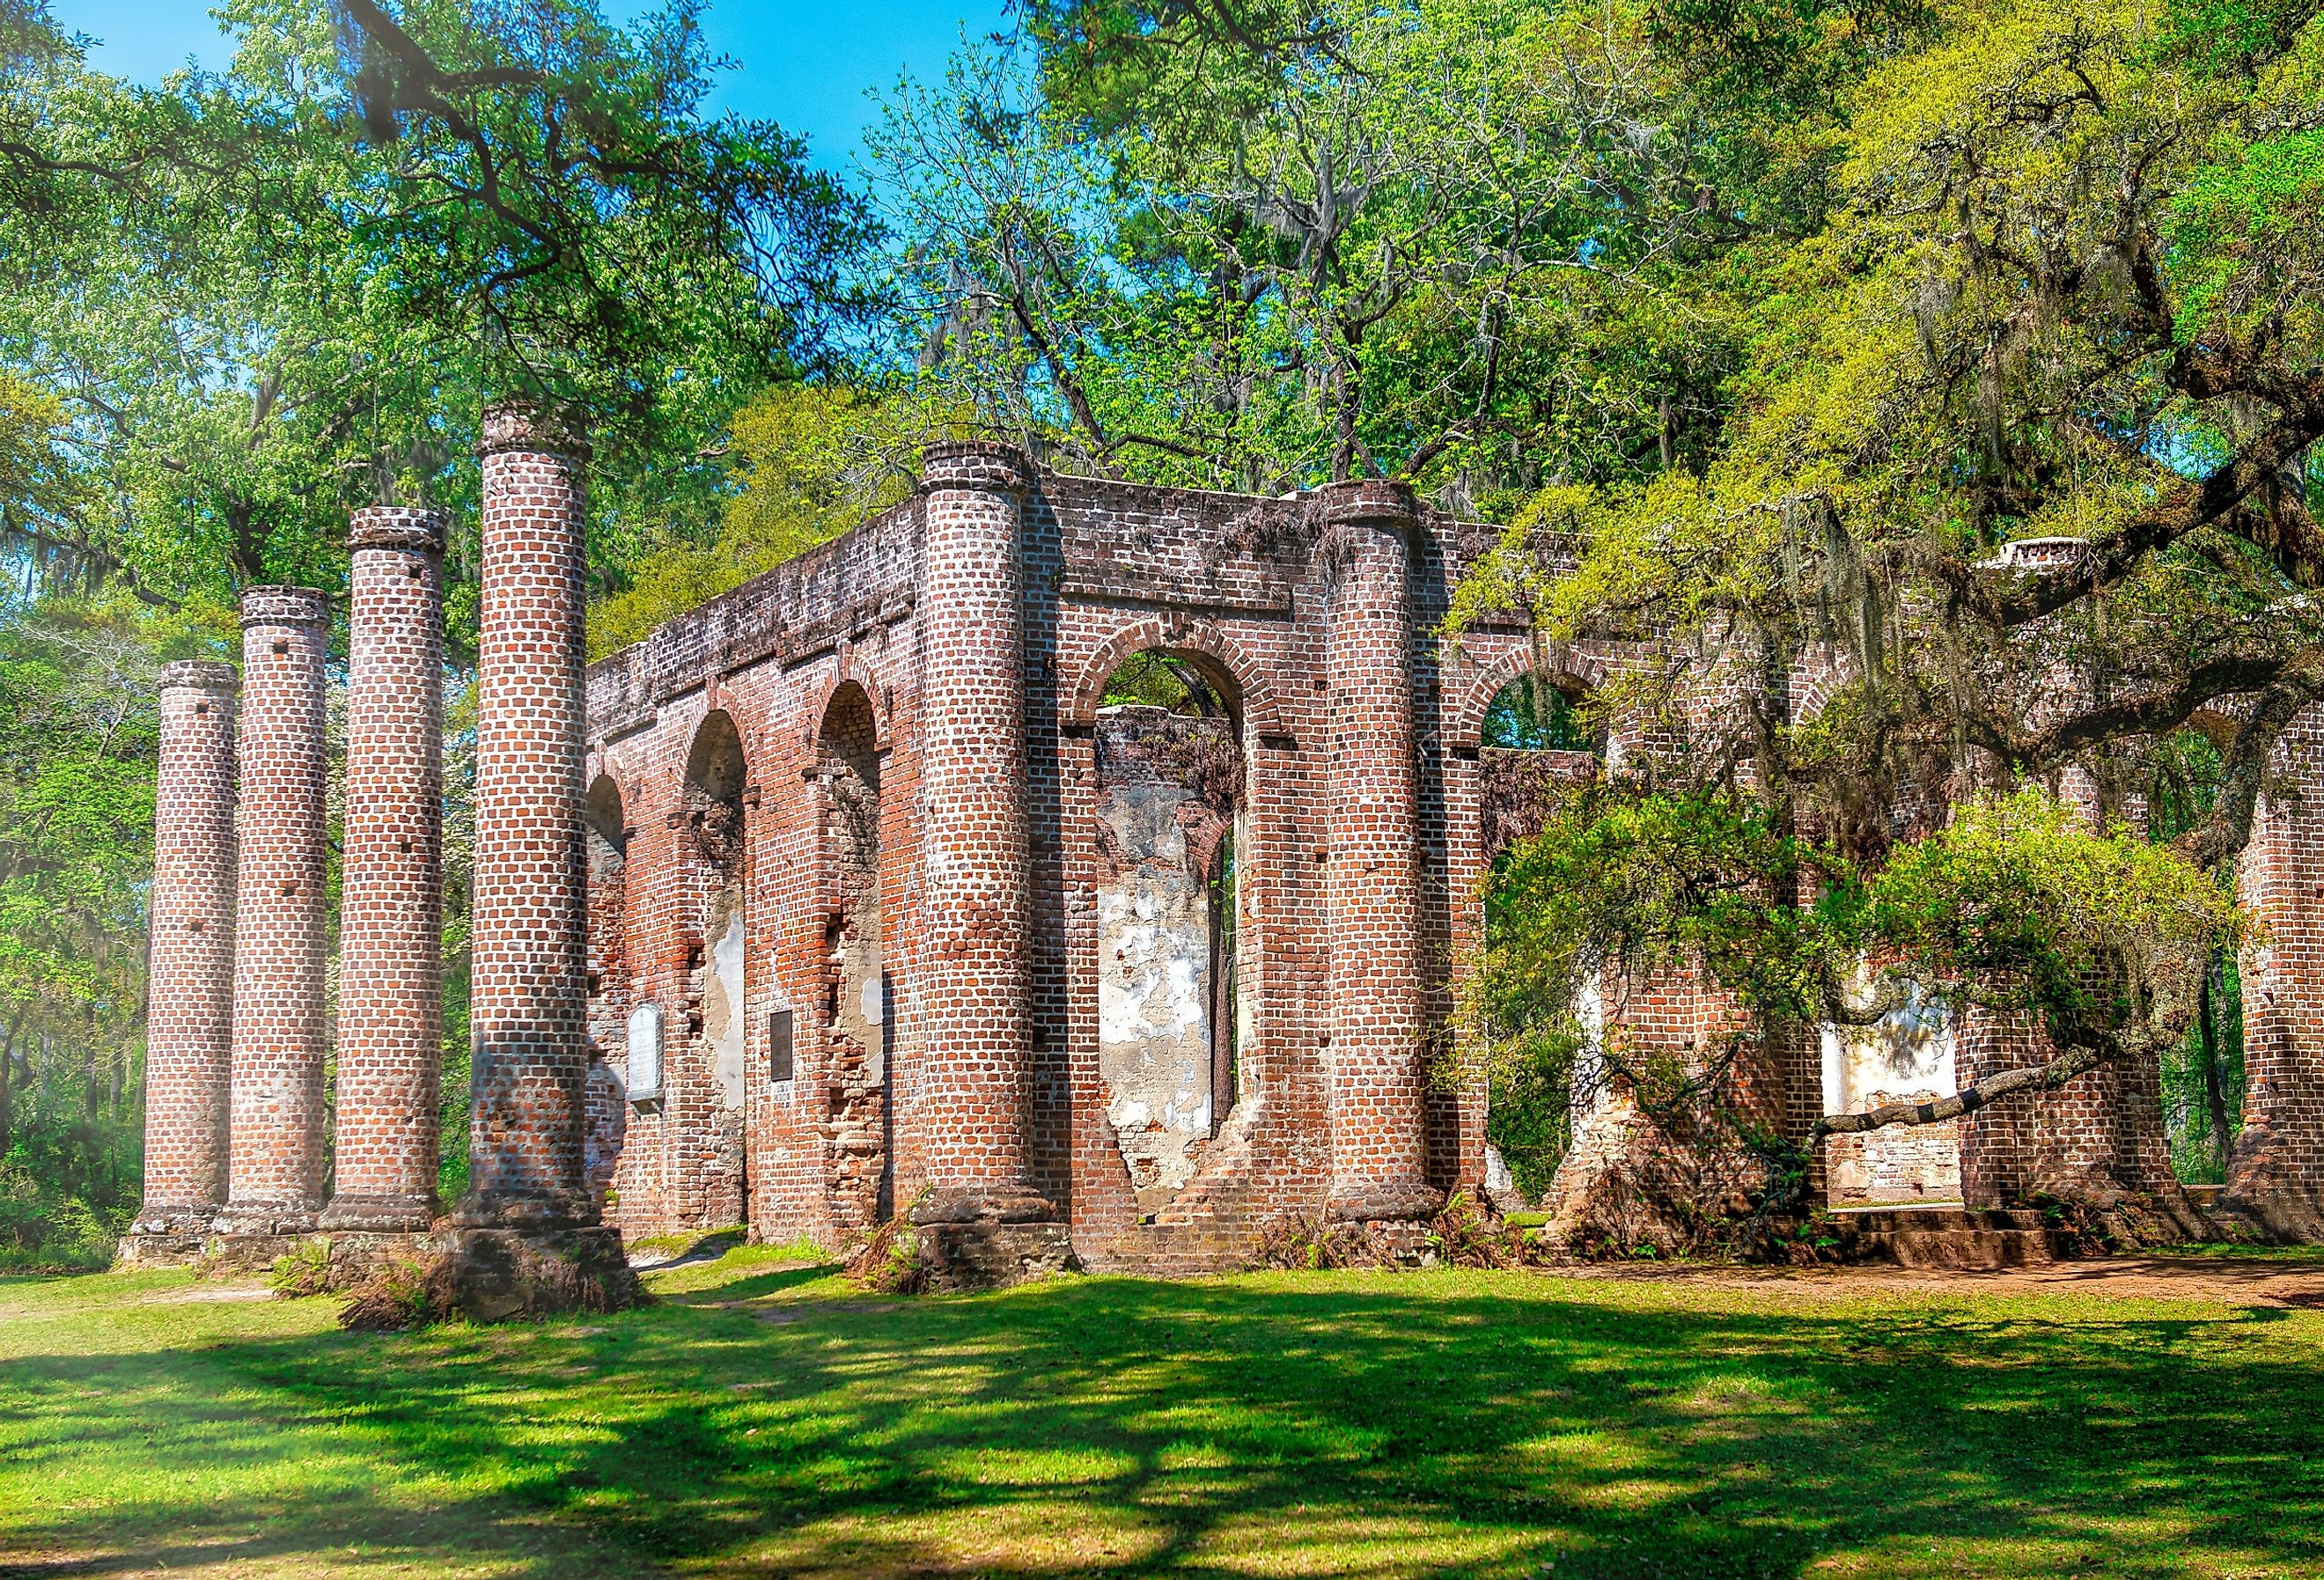 Ruins of Old Sheldon Church in South Carolina.